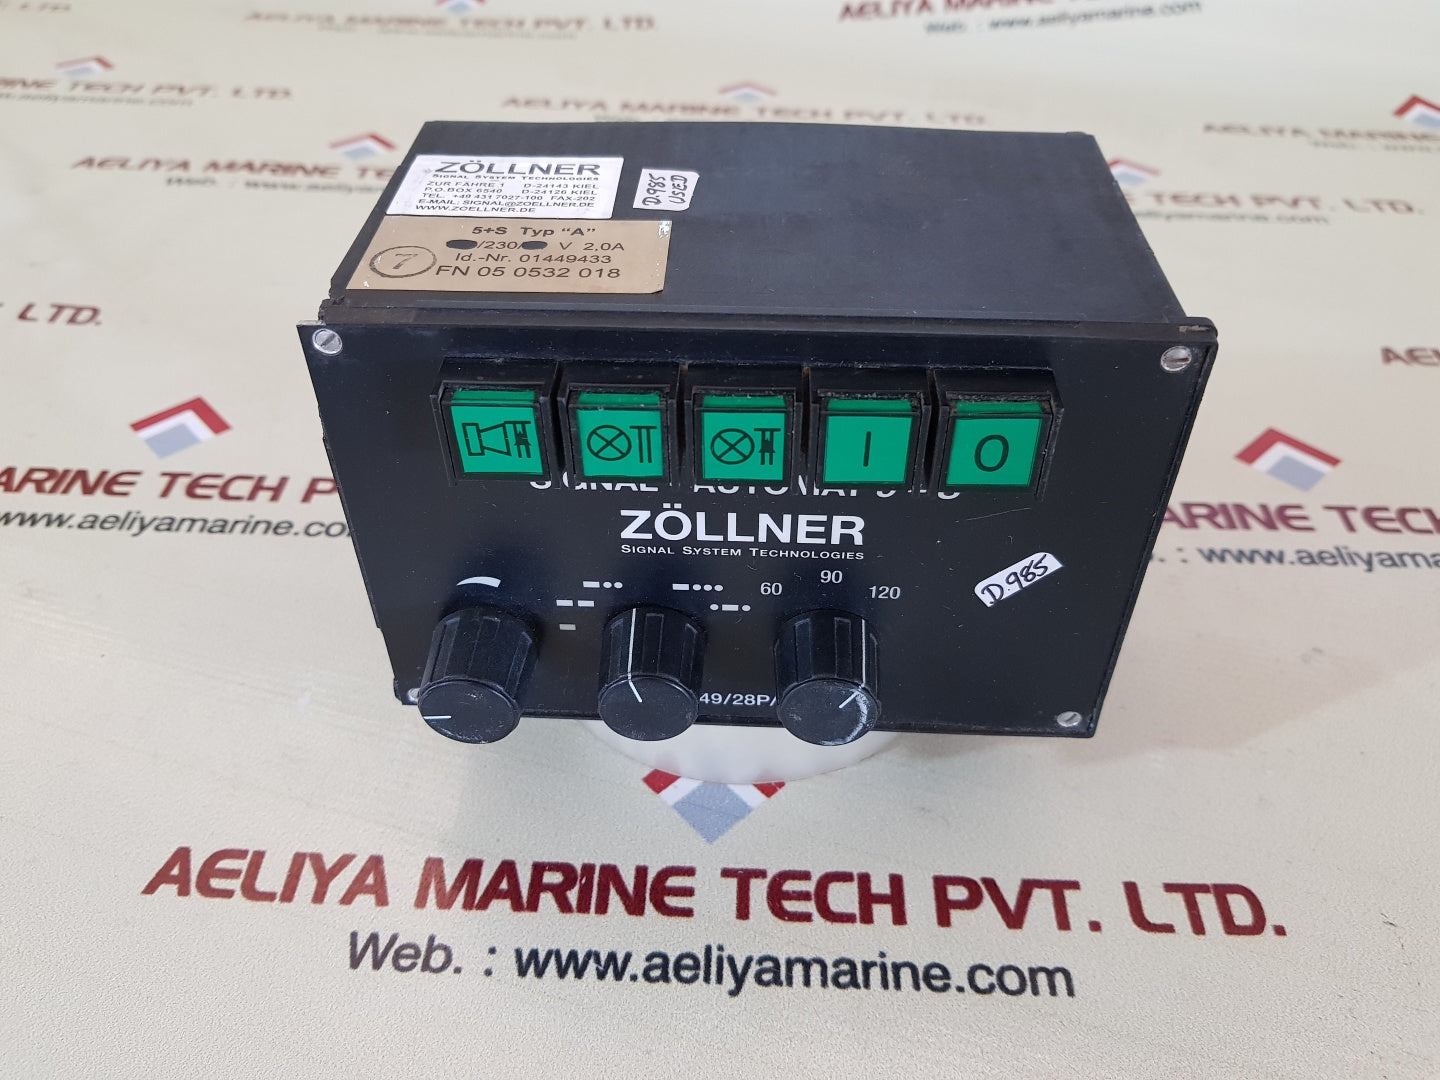 Zollner signal automat 5 s bsh/49/28p/01/92